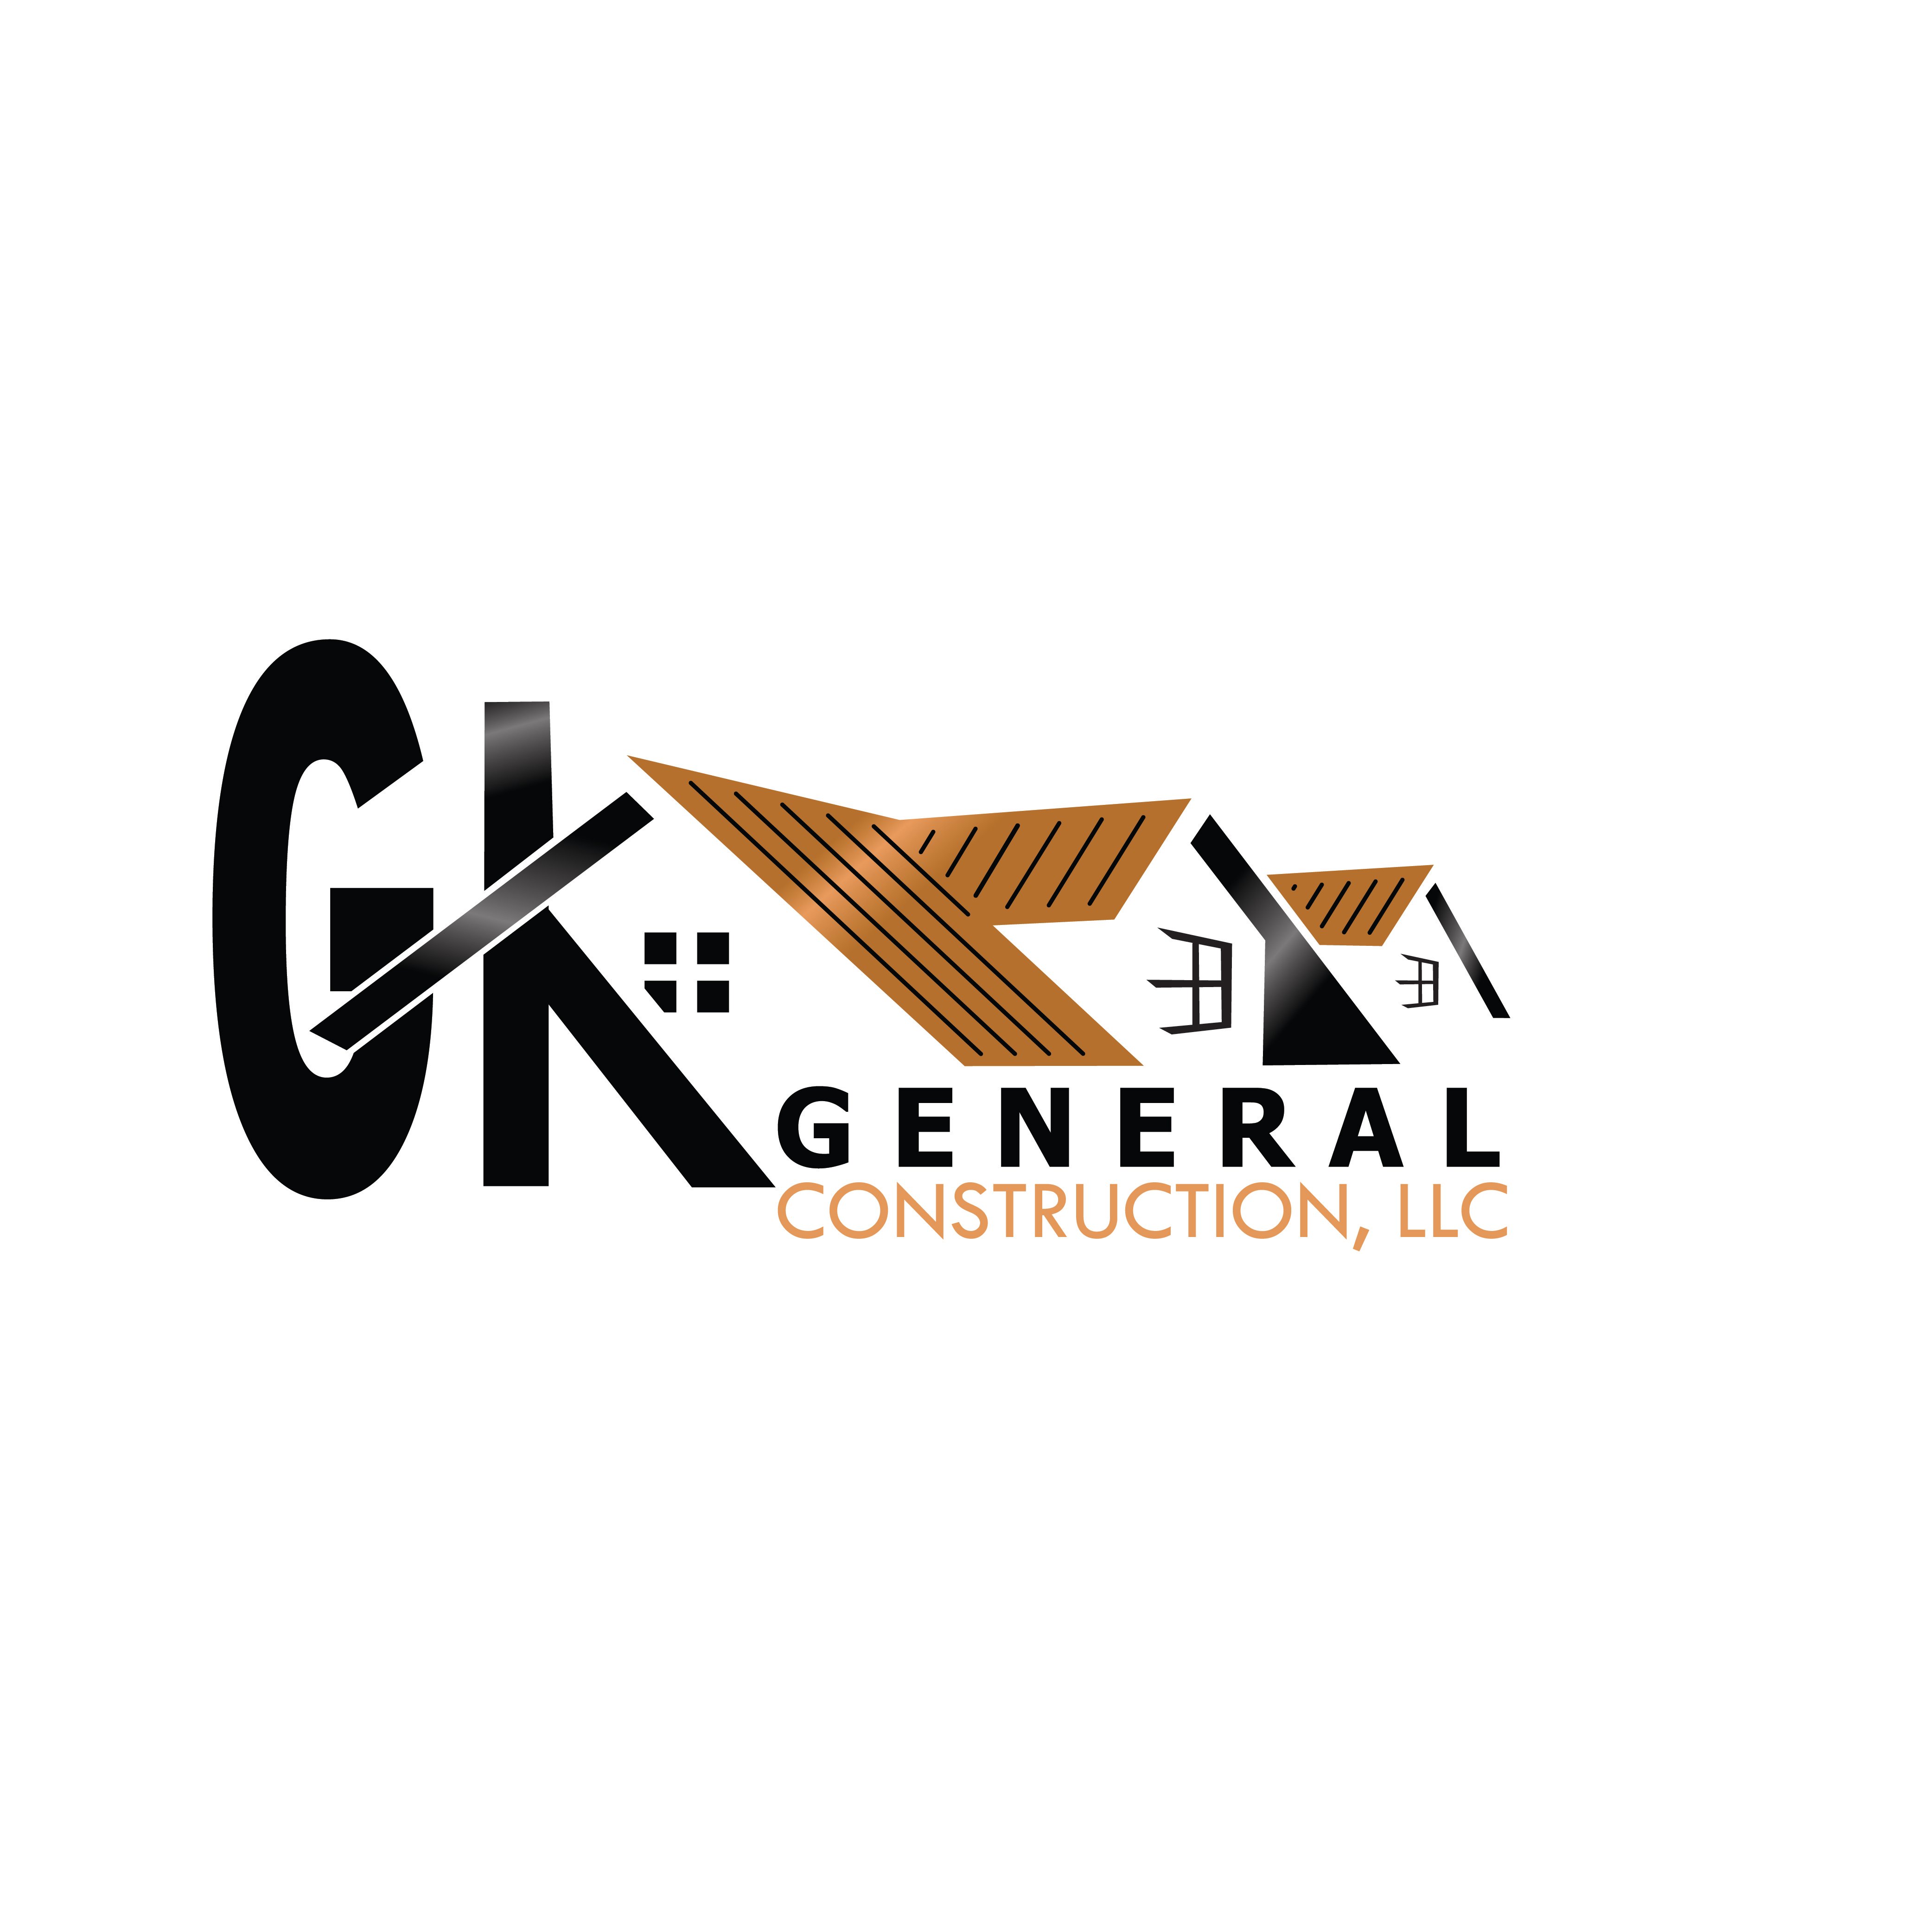 GK General Construction, LLC Logo